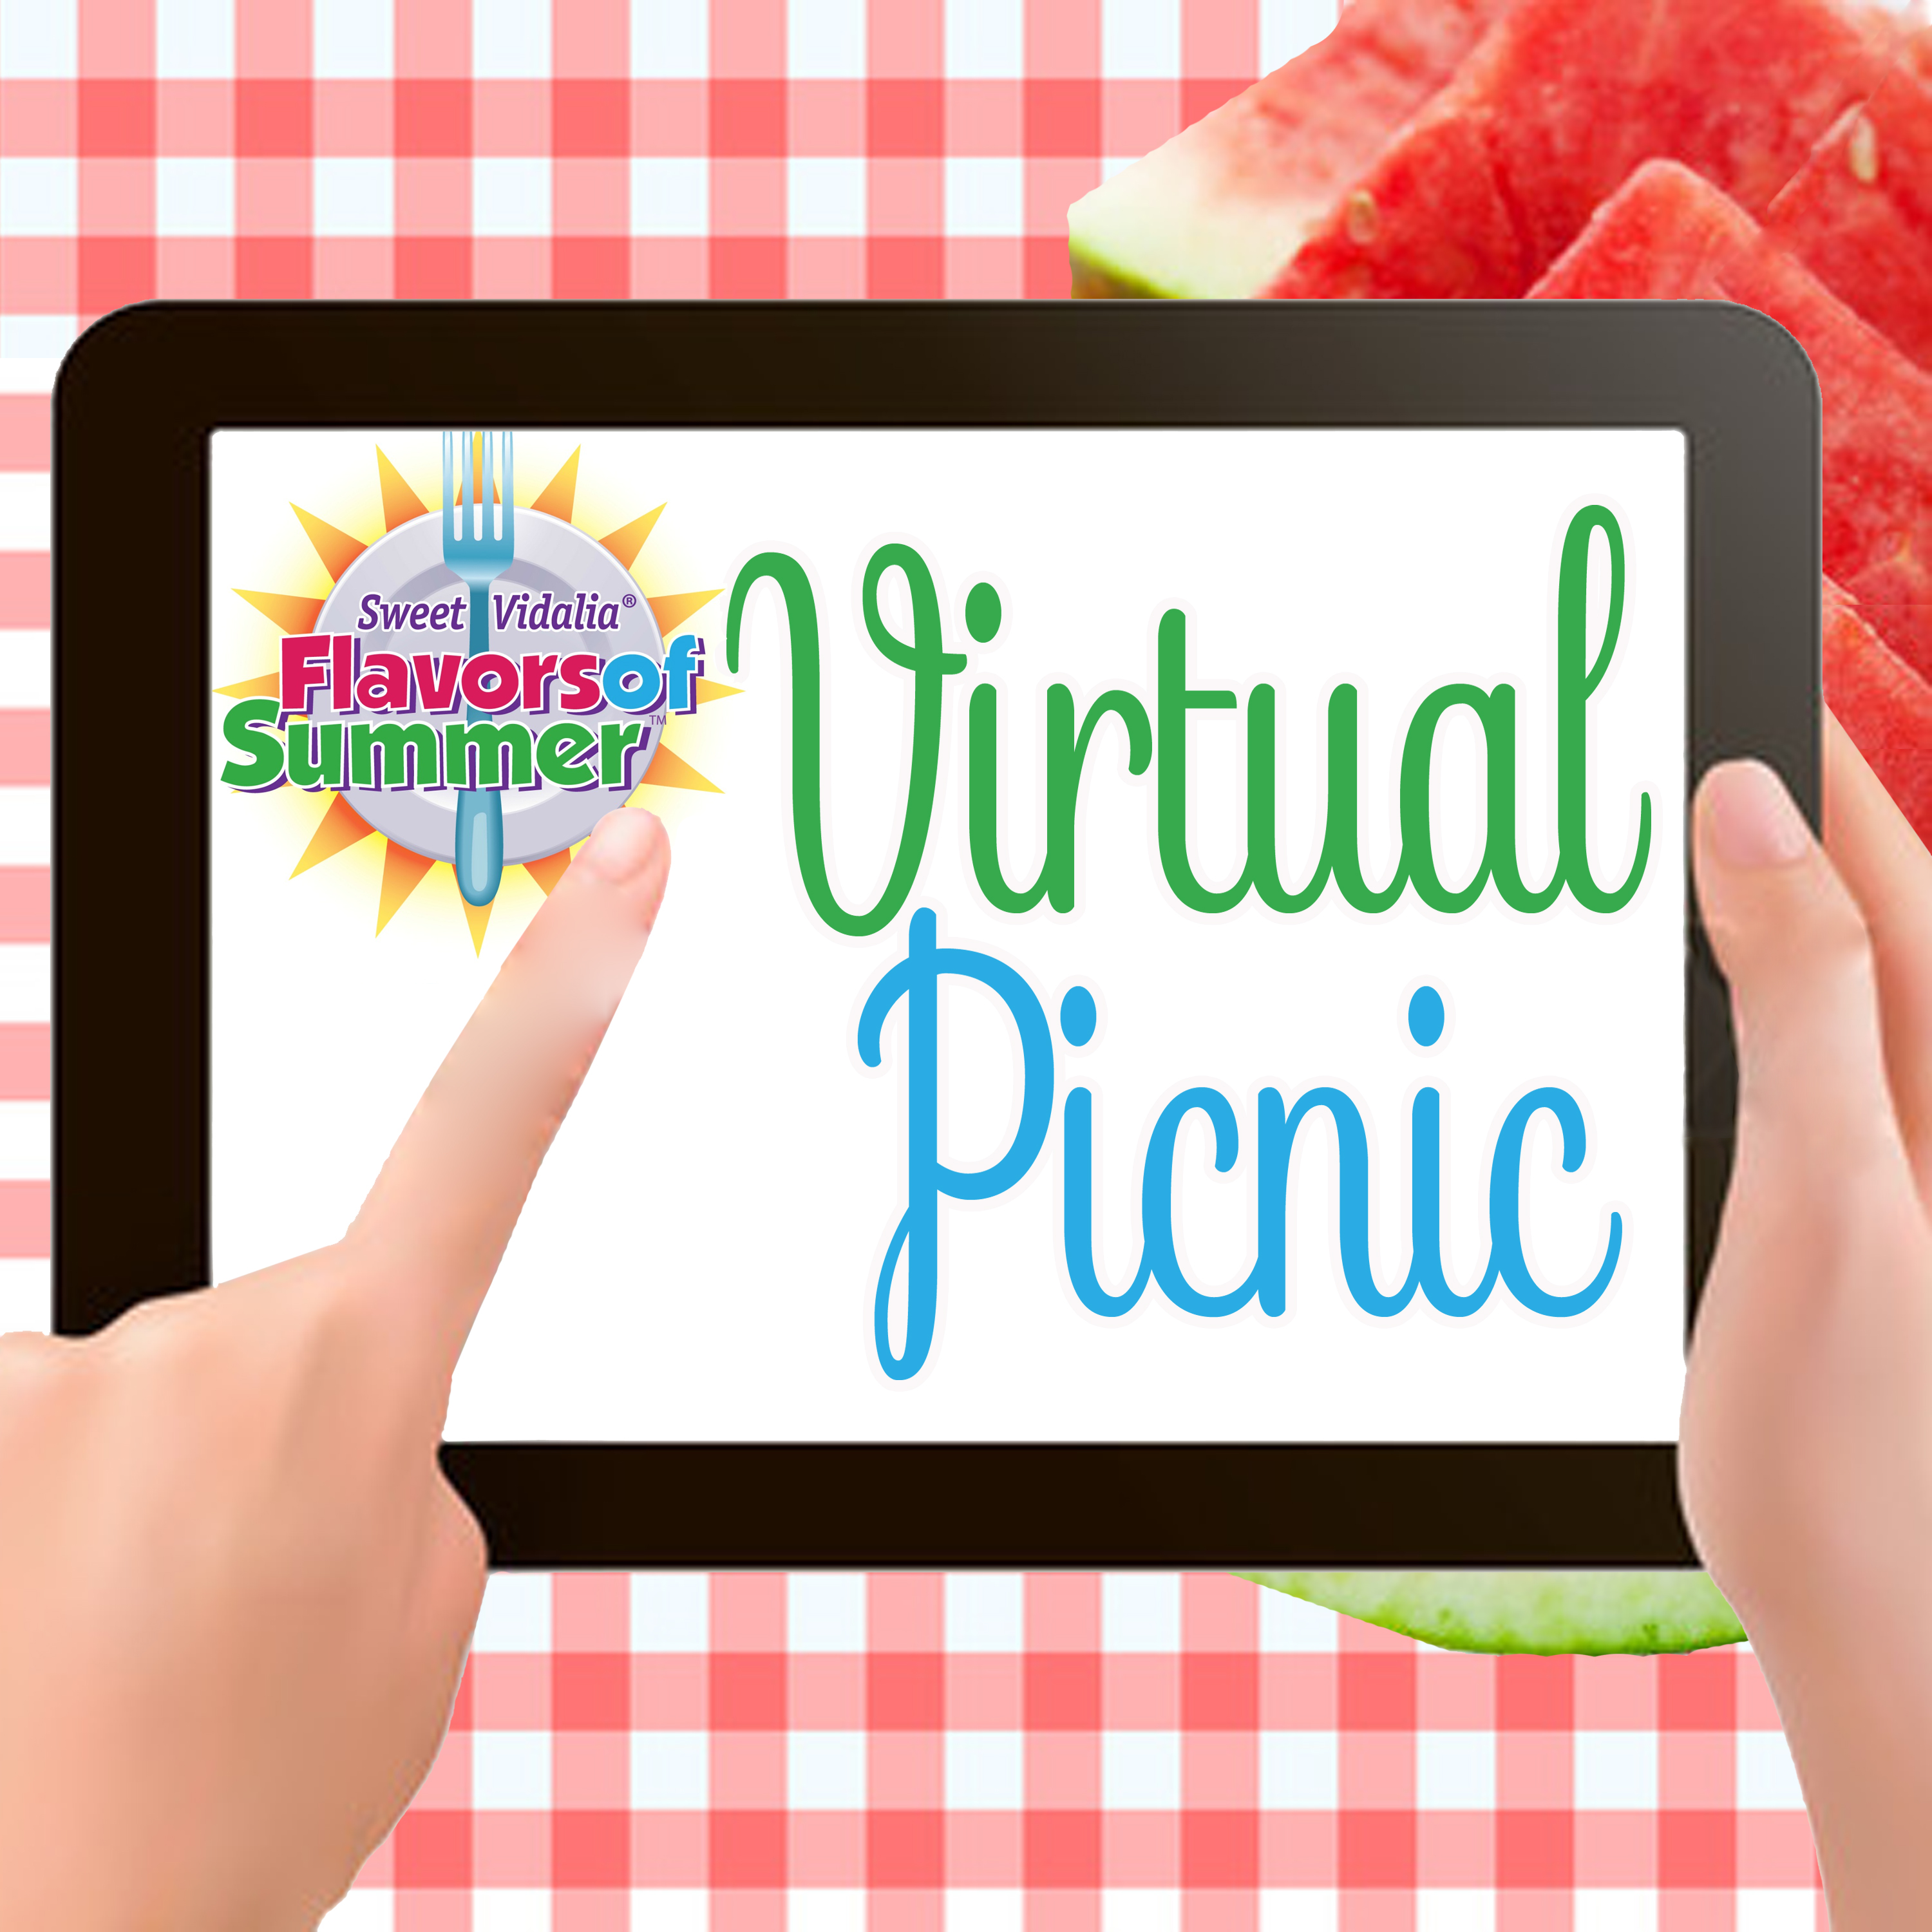 Flavors of Summer Virtual Picnic Kick Off plus Giveaway!